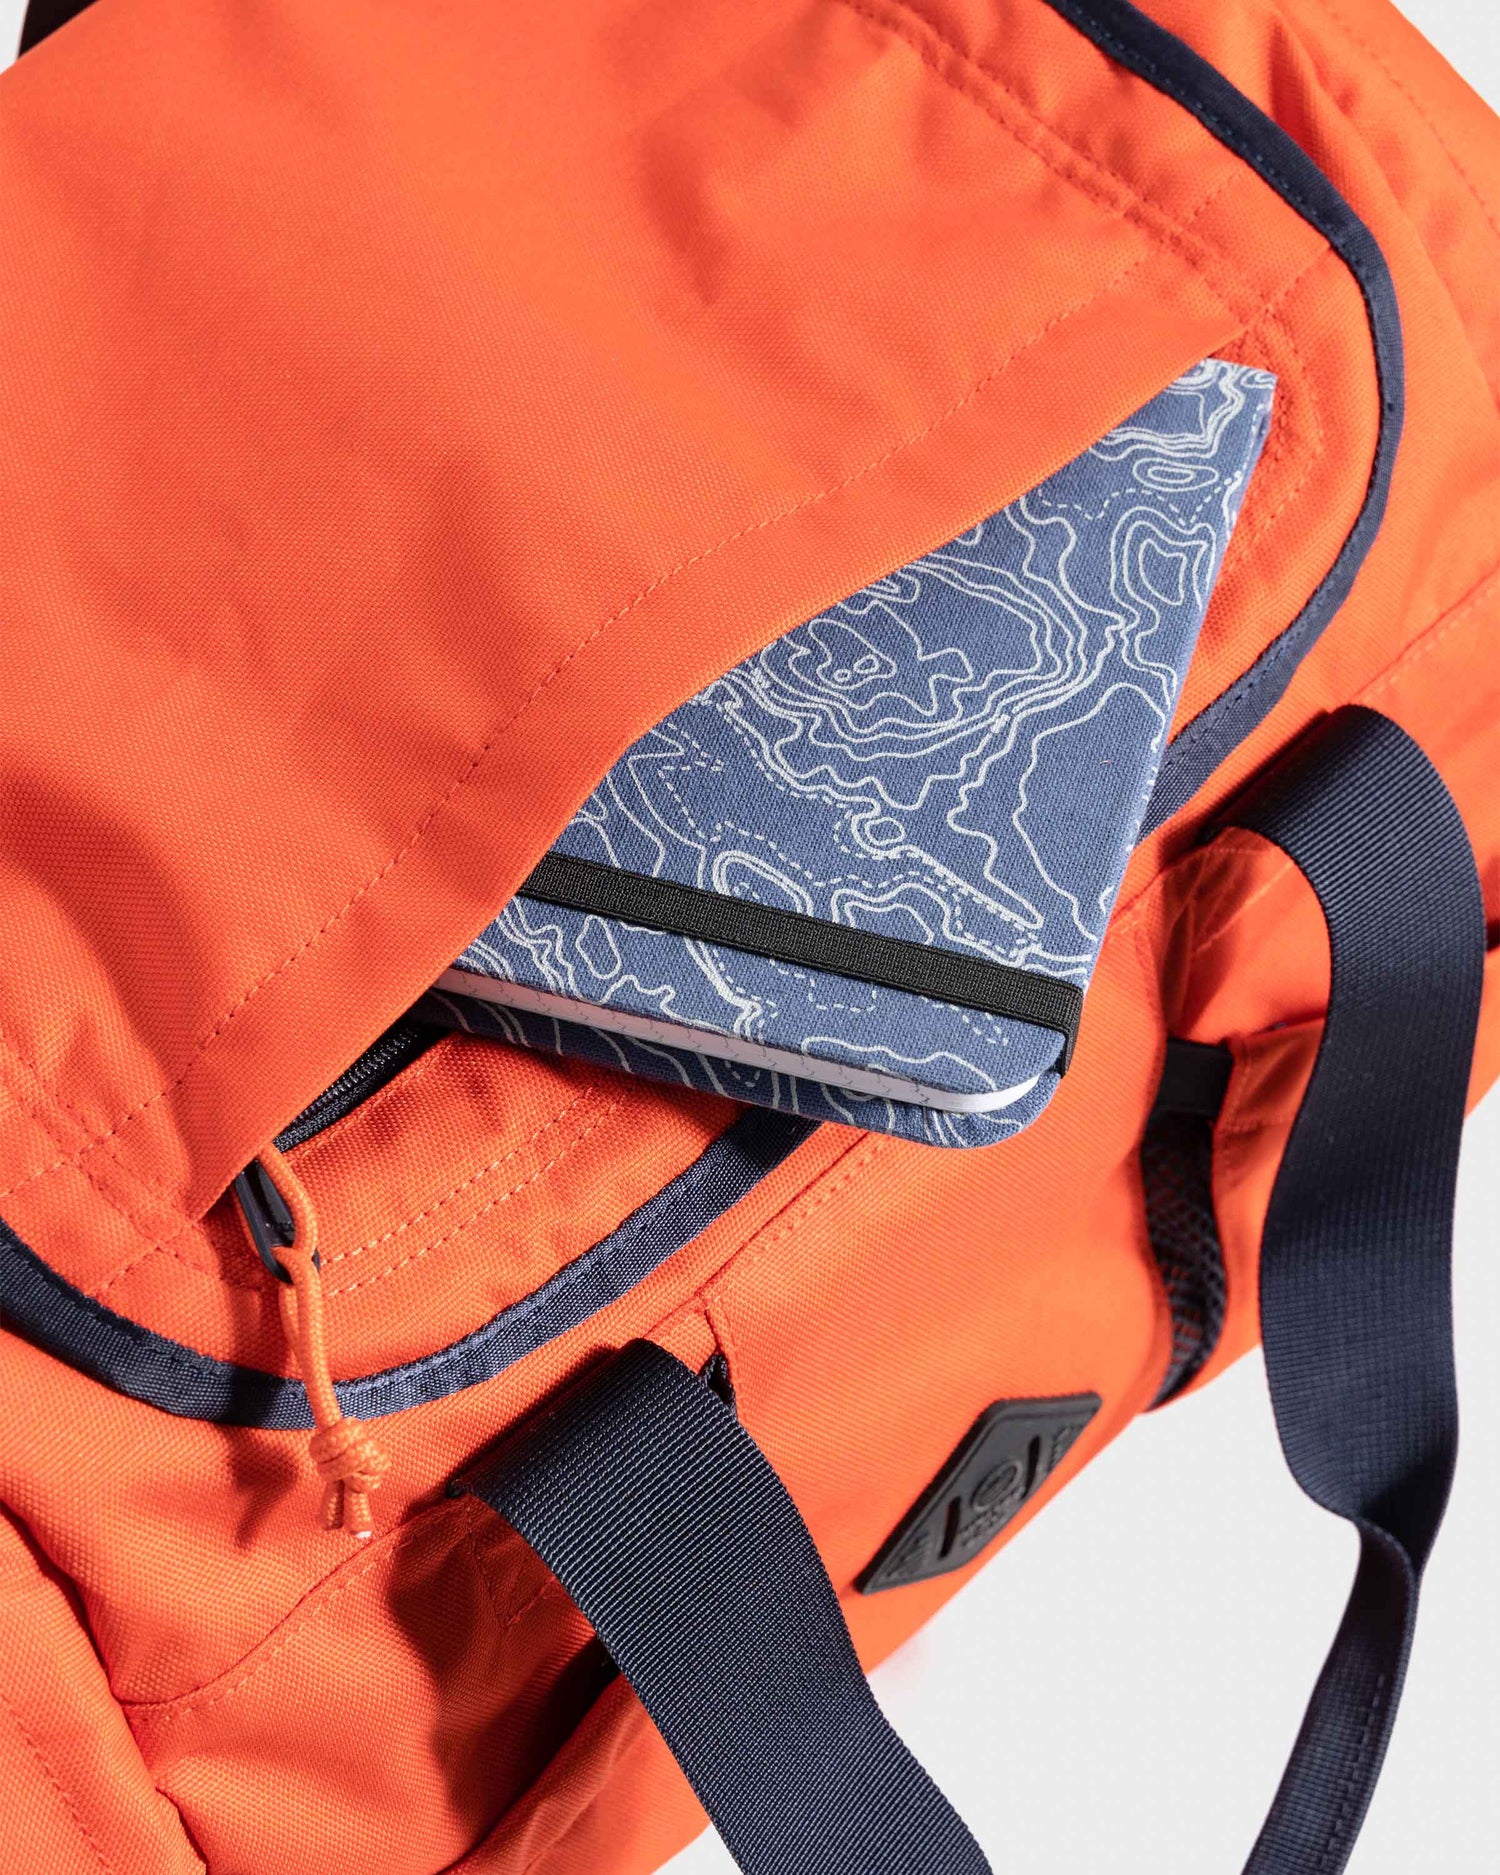 Top pocket on orange mini duffle bag by United by Blue